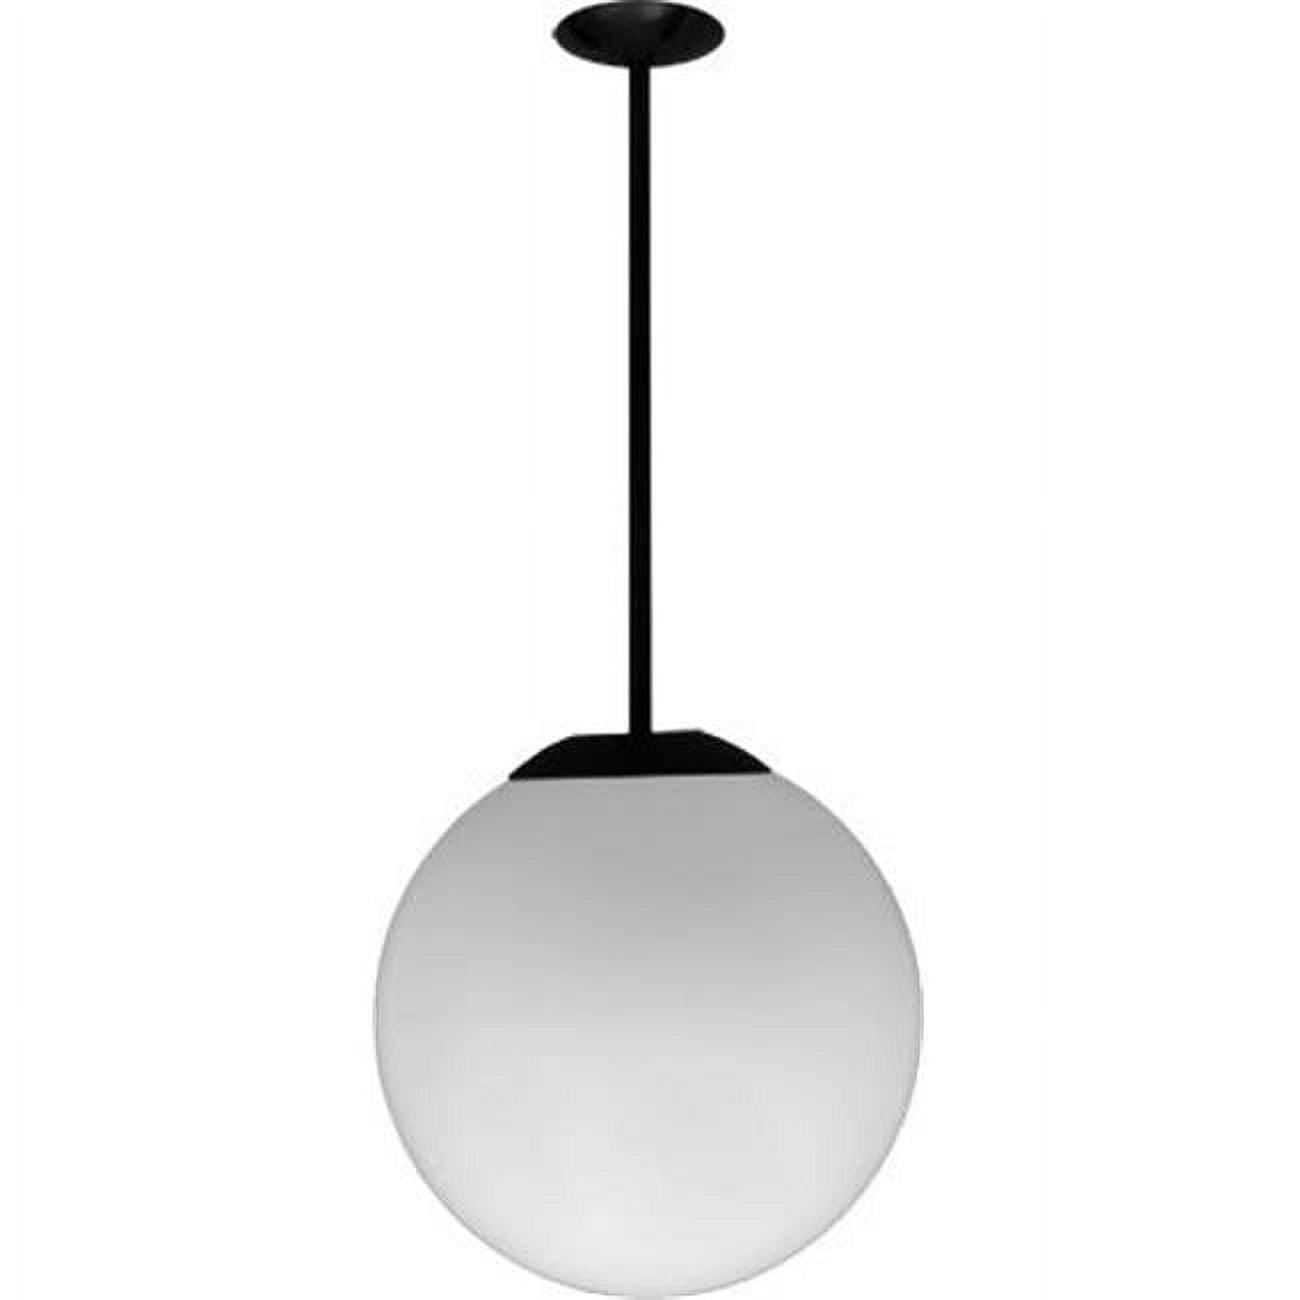 D7516-18-b 18 In. 120 V 50 Watts Ceiling Globe Fixture 18 In. Drop With Metal Halide Lamp, Black